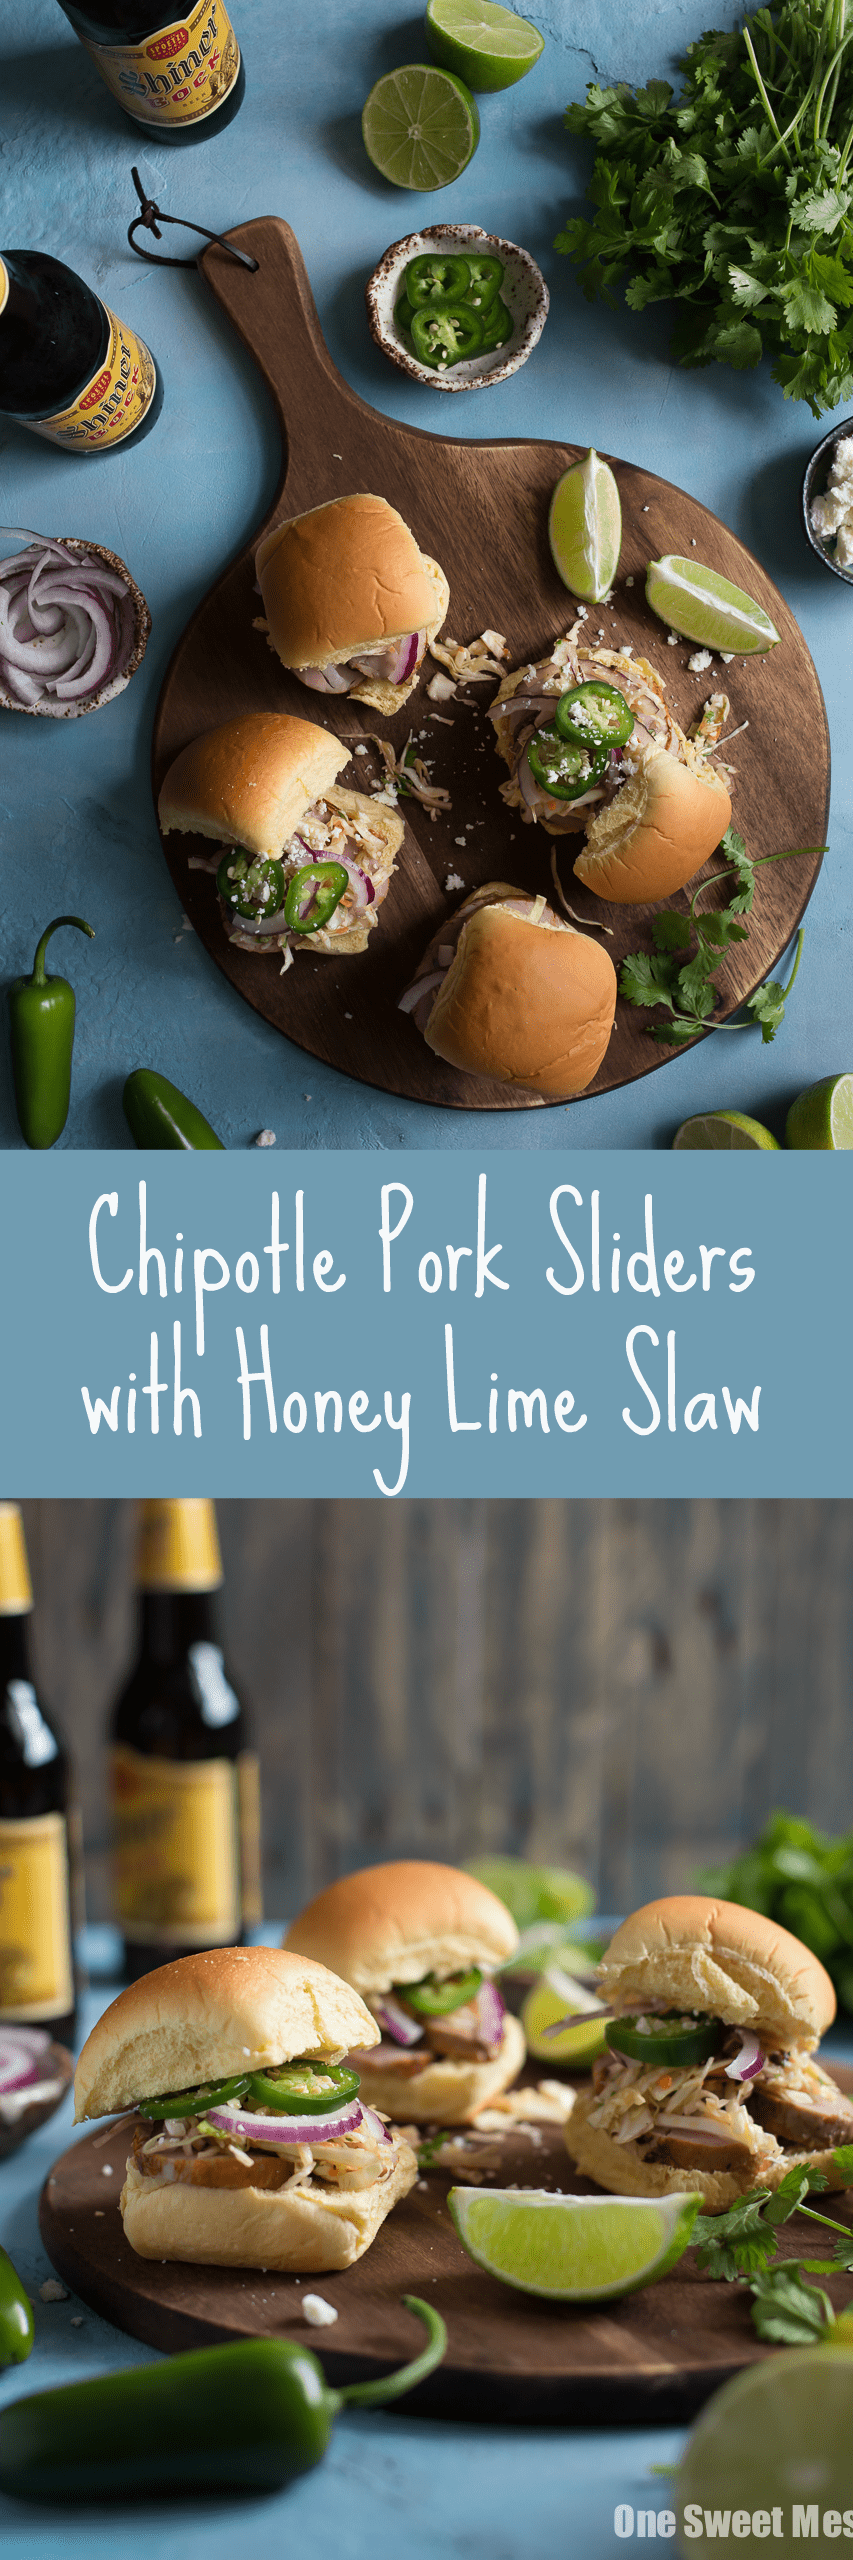 Chipotle Pork Sliders with Honey Lime Slaw